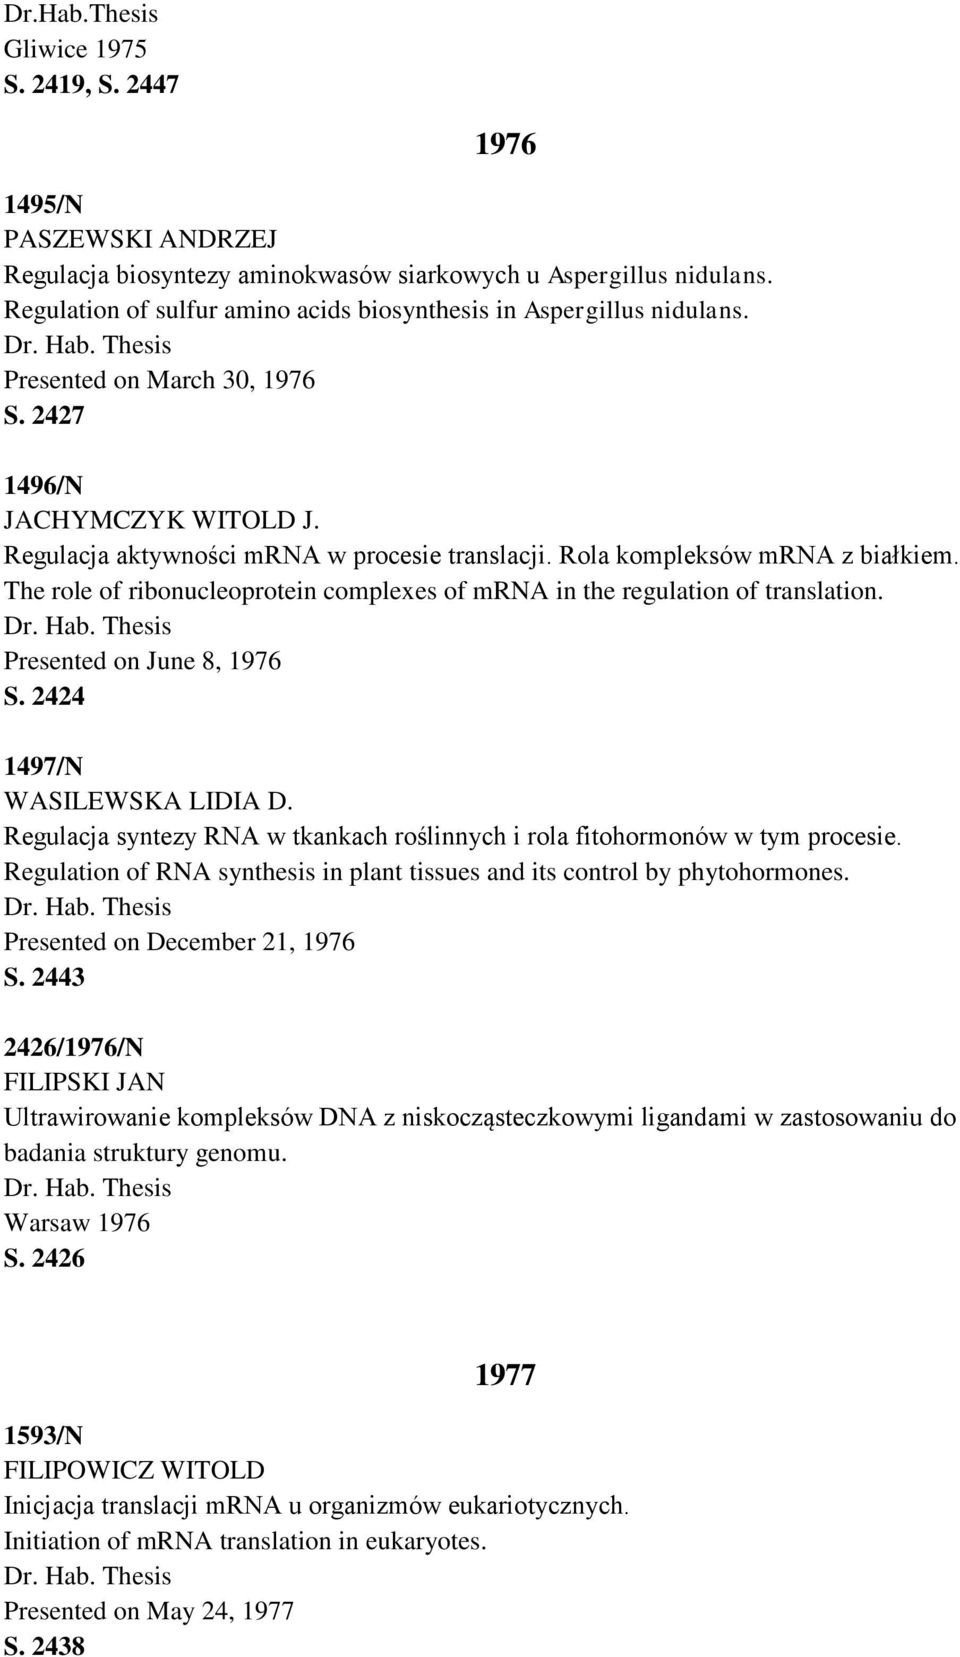 Rola kompleksów mrna z białkiem. The role of ribonucleoprotein complexes of mrna in the regulation of translation. Presented on June 8, 1976 S. 2424 1497/N WASILEWSKA LIDIA D.